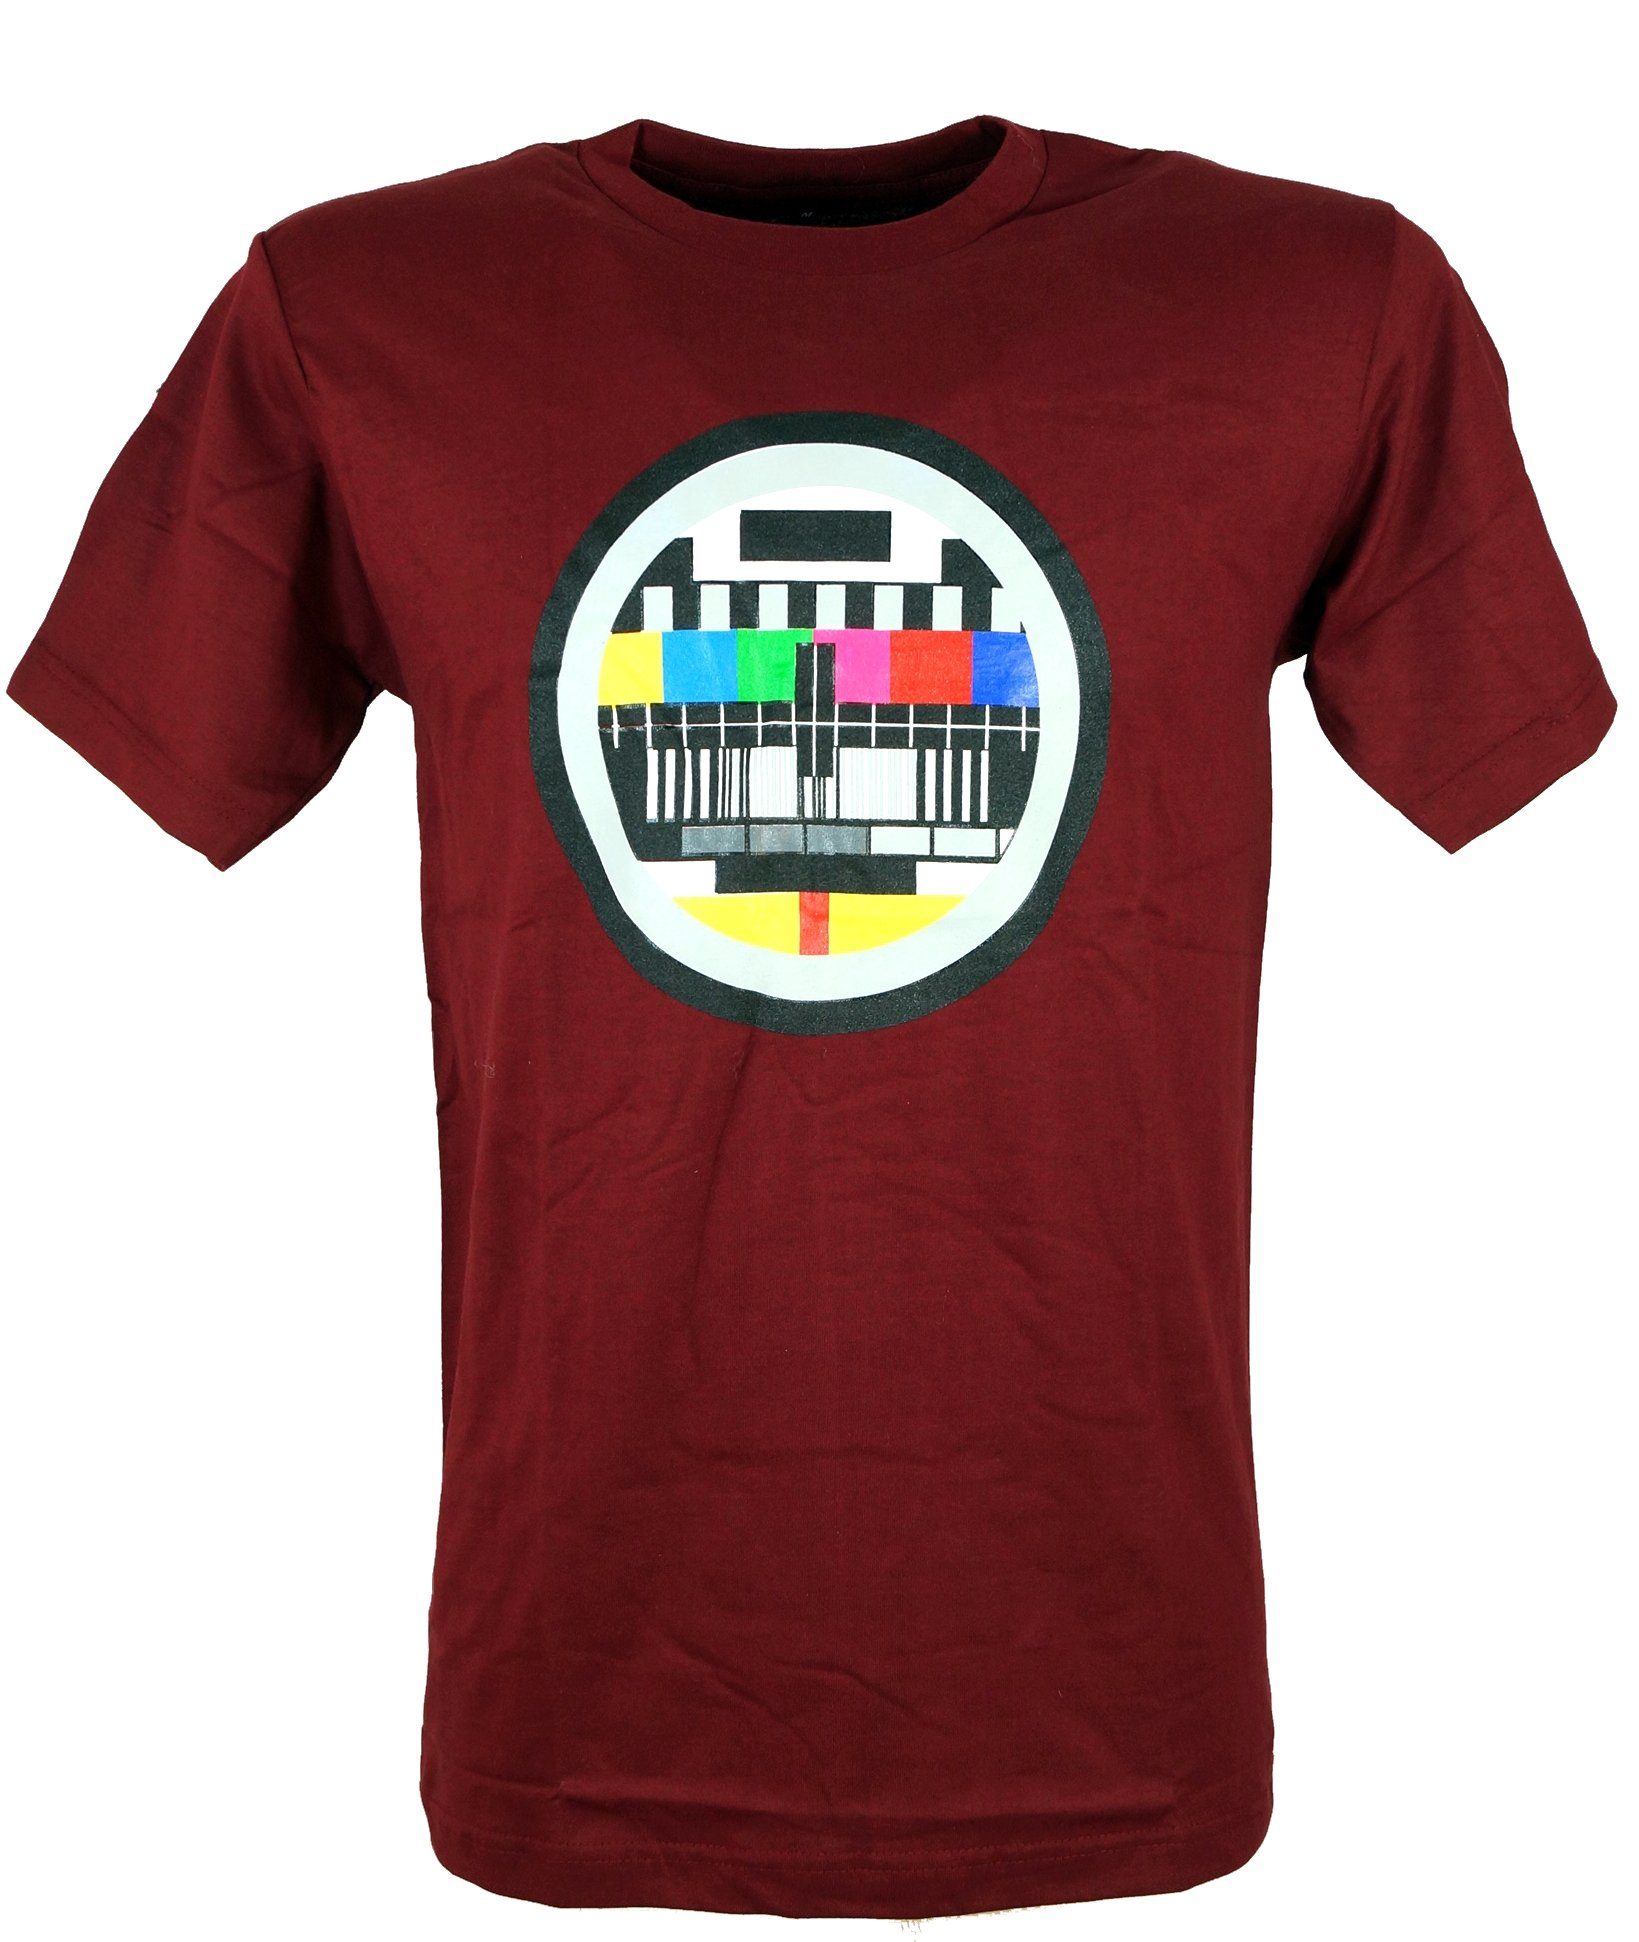 Guru-Shop T-Shirt Fun Retro Art T-Shirt `Testbild` - dunkelrot alternative Bekleidung